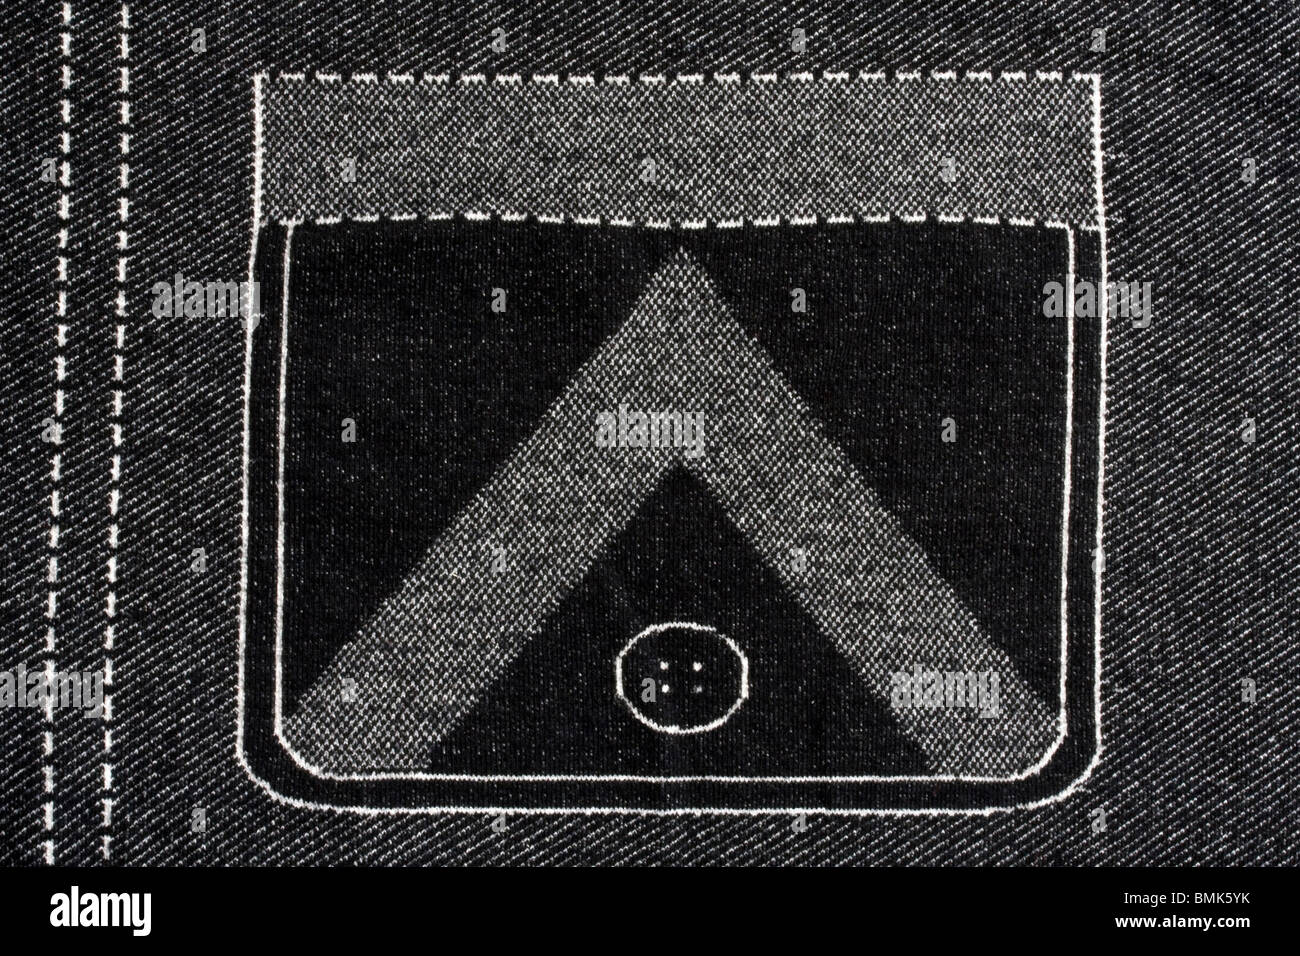 Denim fabric with pocket pattern background Stock Photo